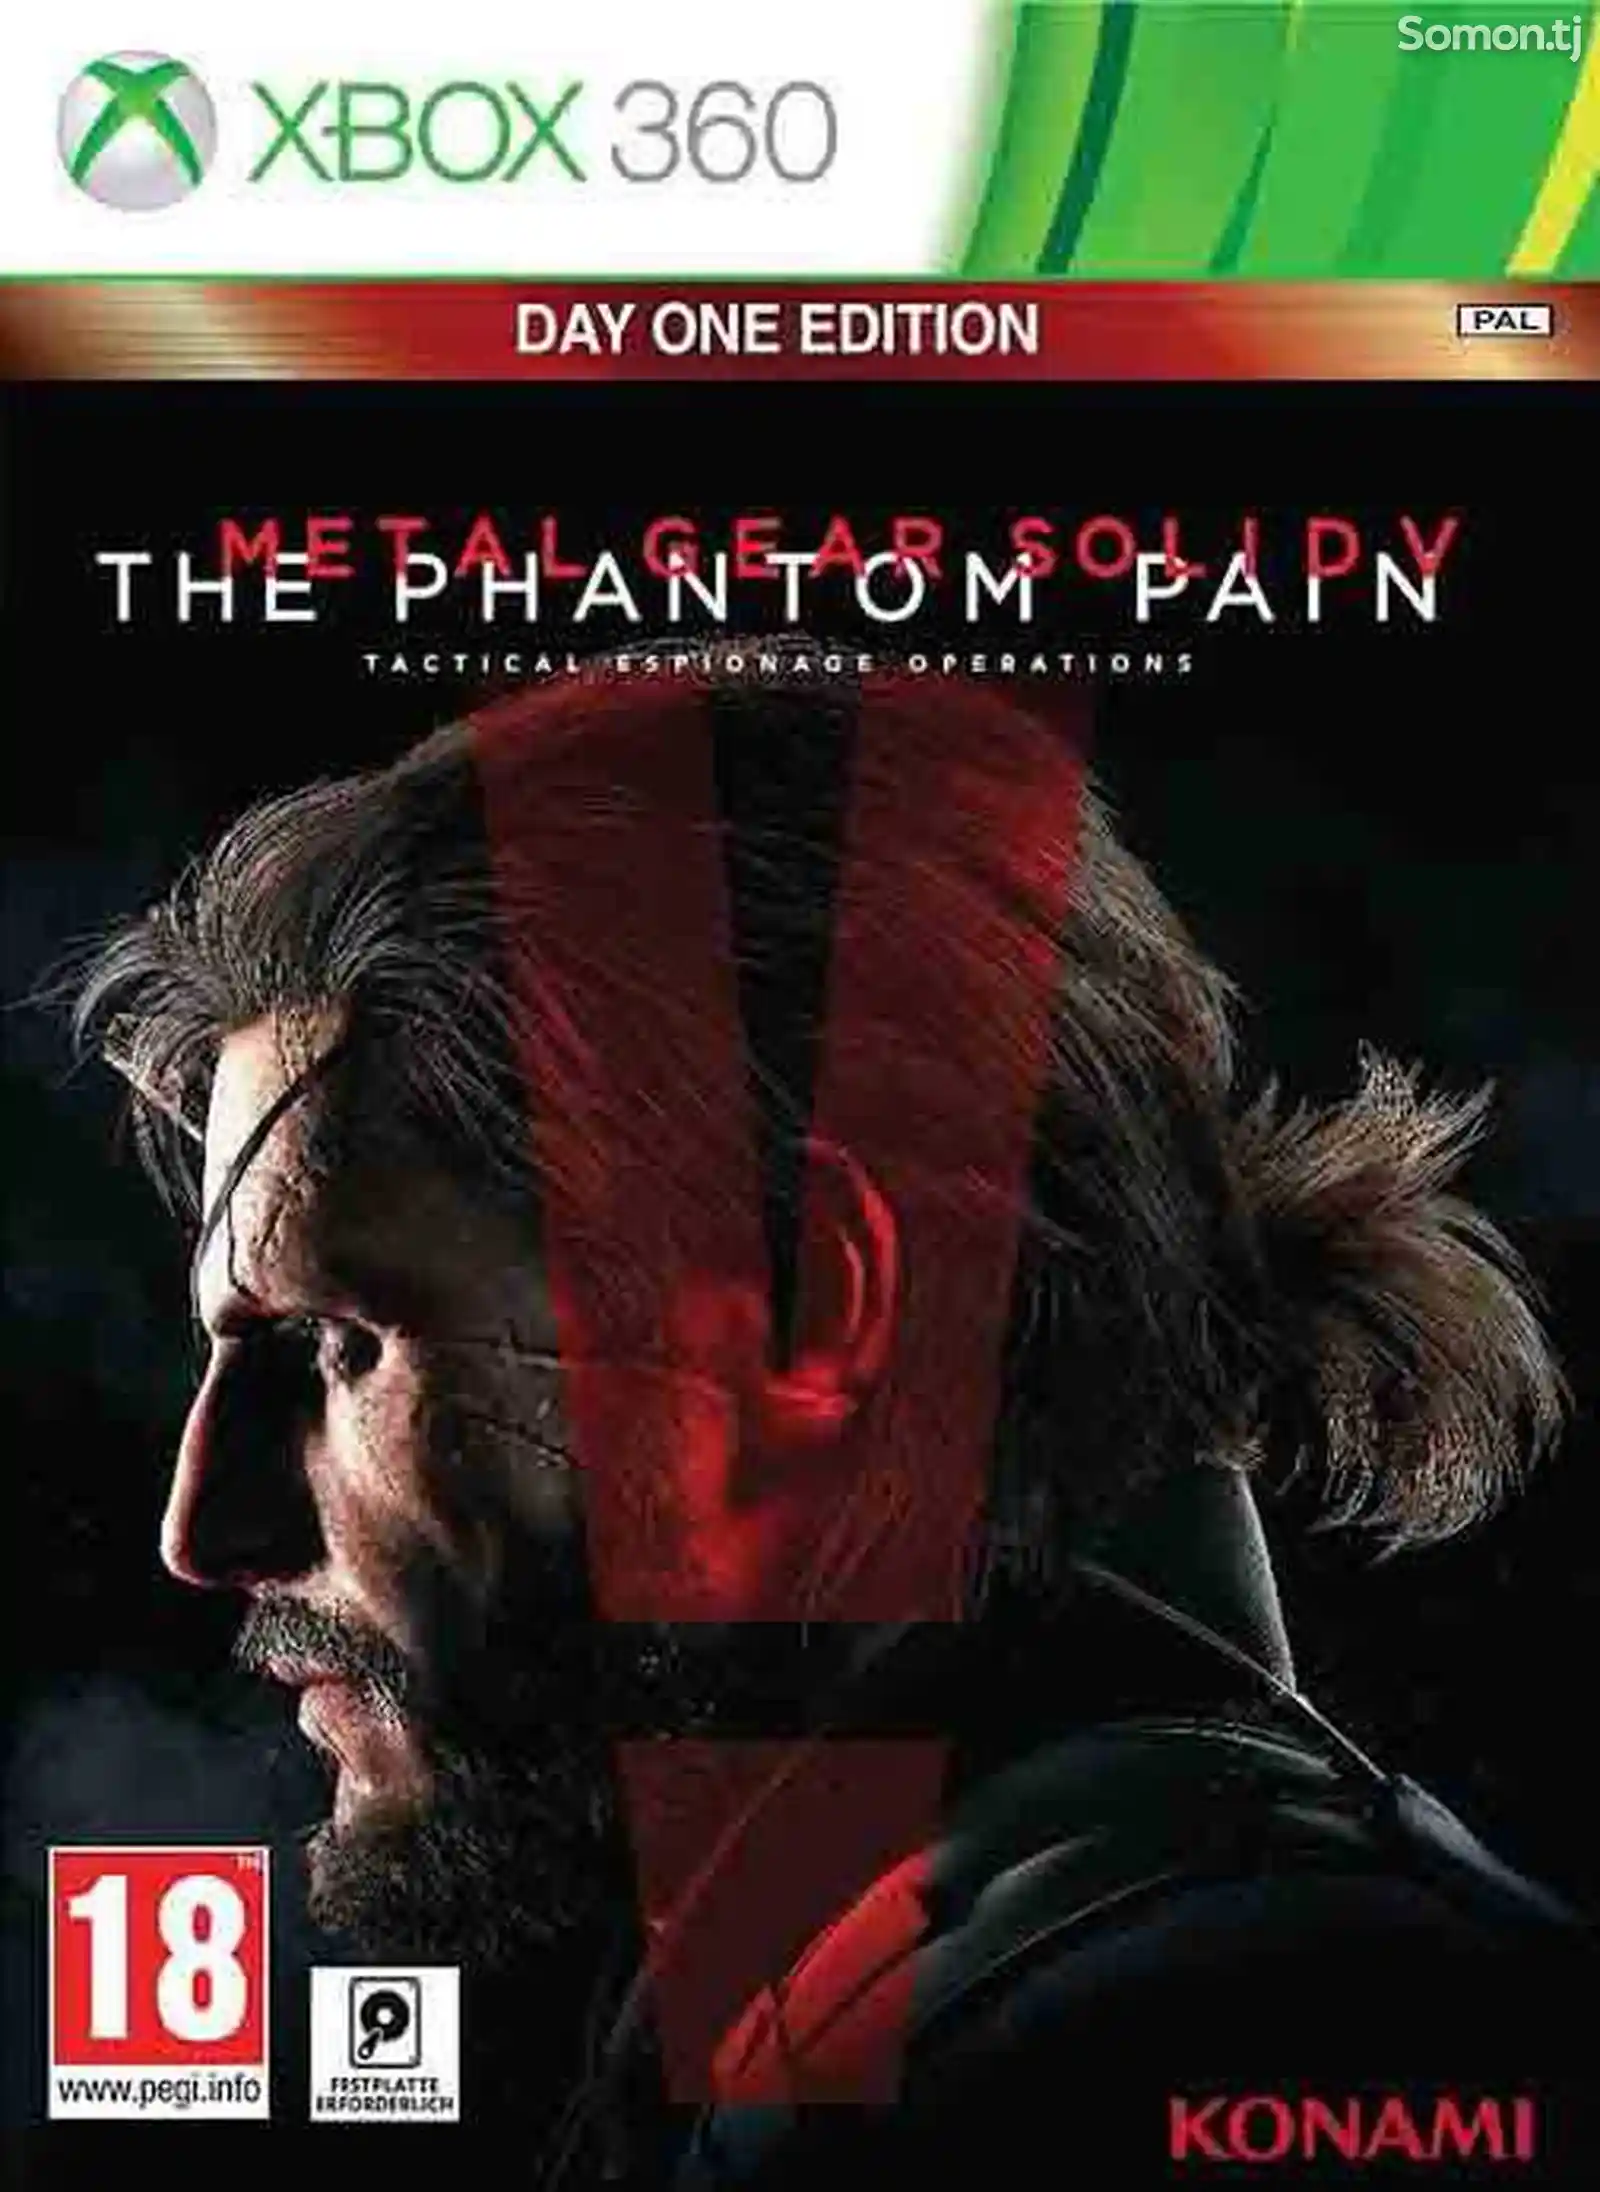 Игра Metal gear solid 5 The phantom pain для прошитых Xbox 360